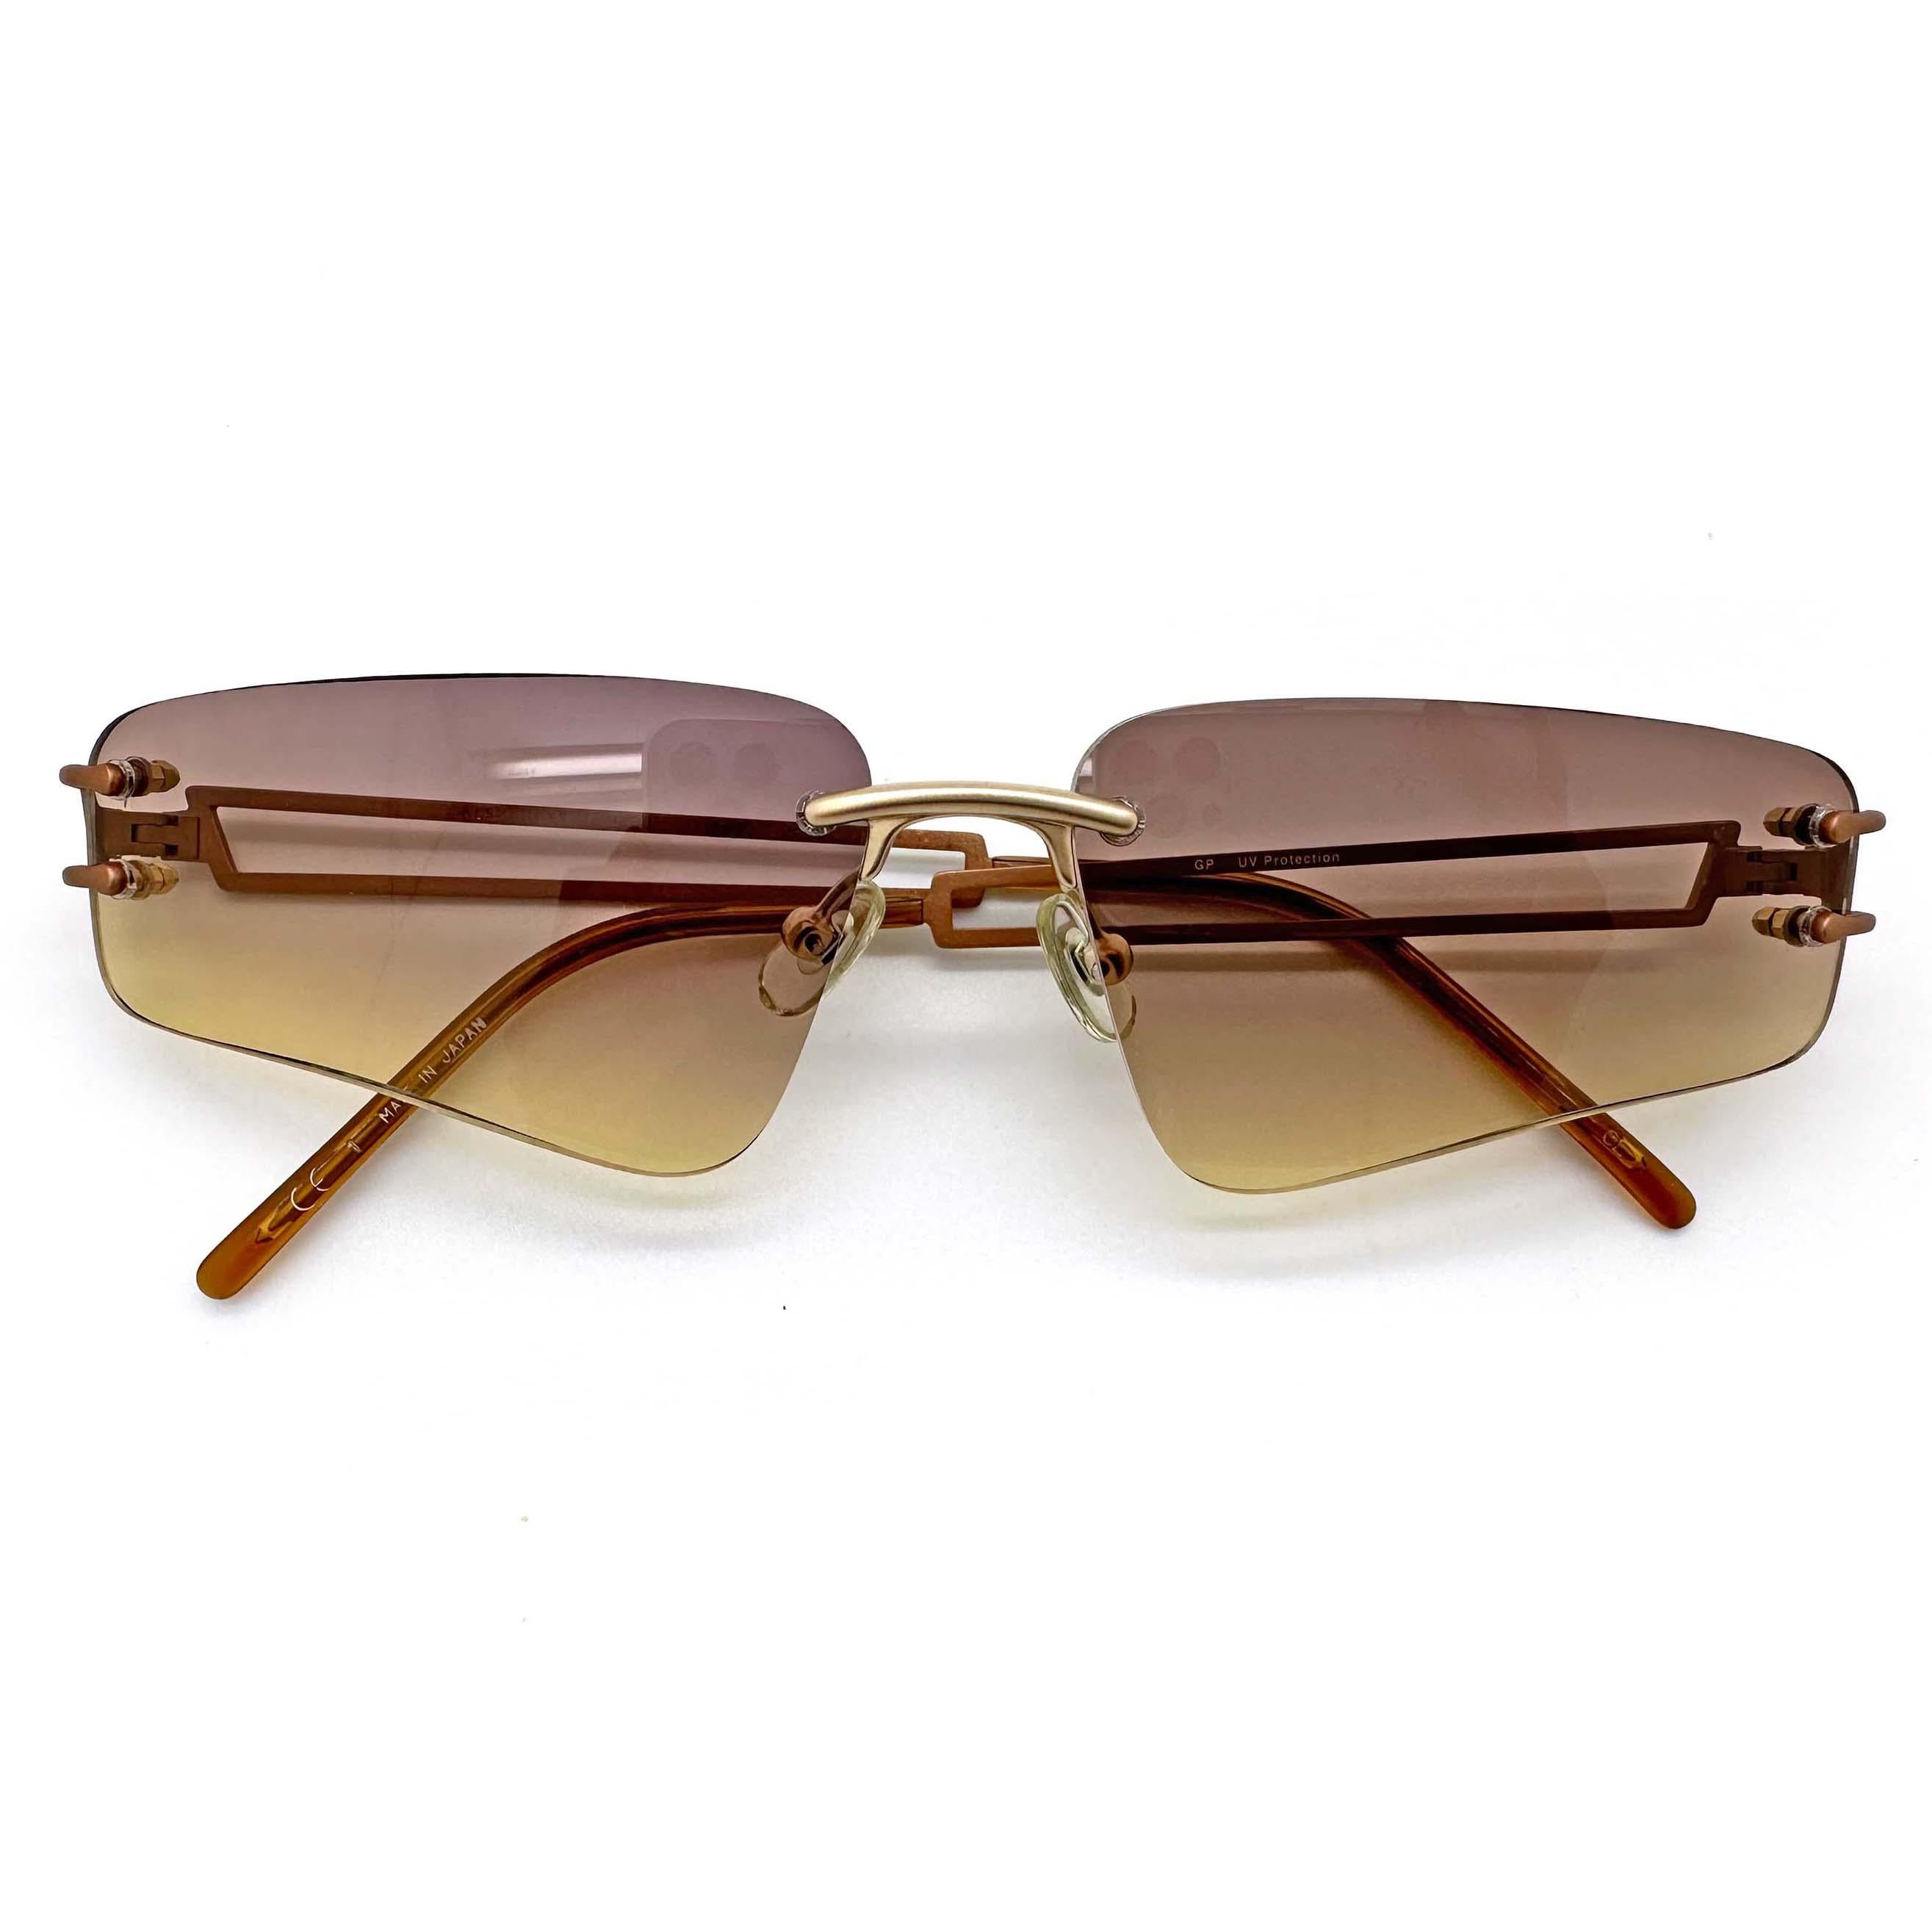 Alexander McQueen Japan vintage sunglasses In New Condition For Sale In Santa Clarita, CA